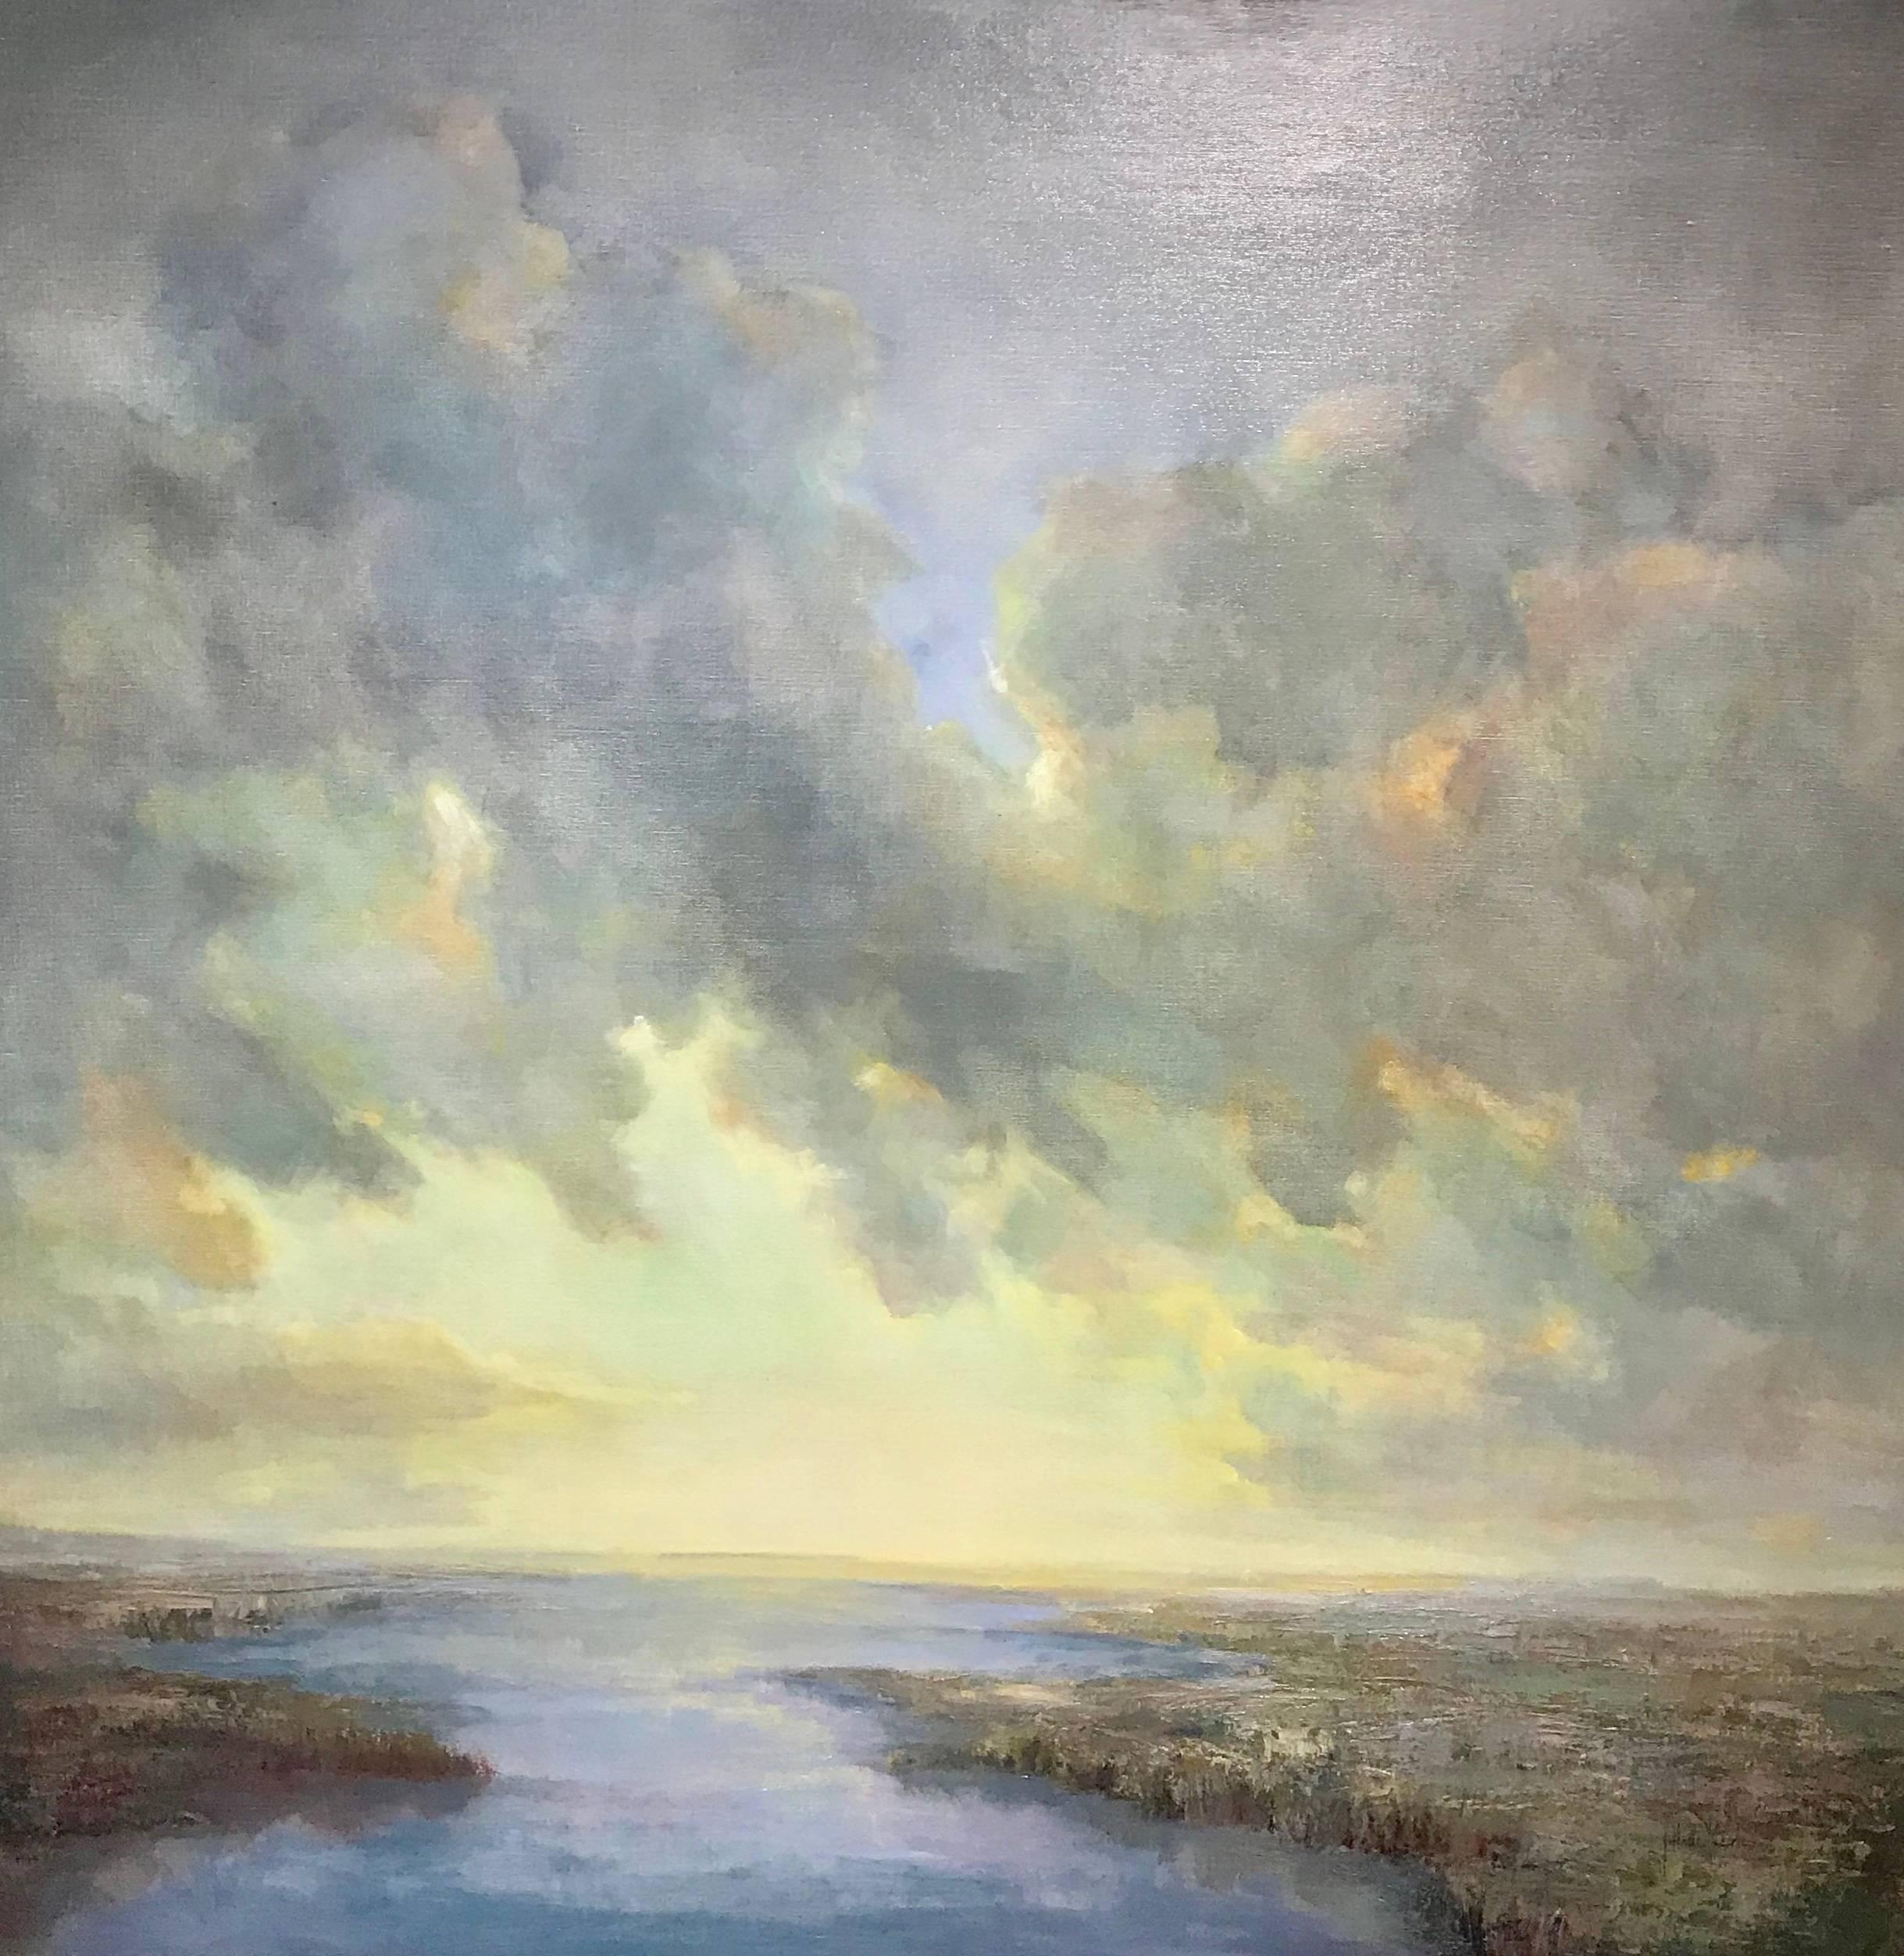 Julie Houck Landscape Painting - 'Ascension', Large Post-Impressionist Landscape Square Oil on Linen Painting